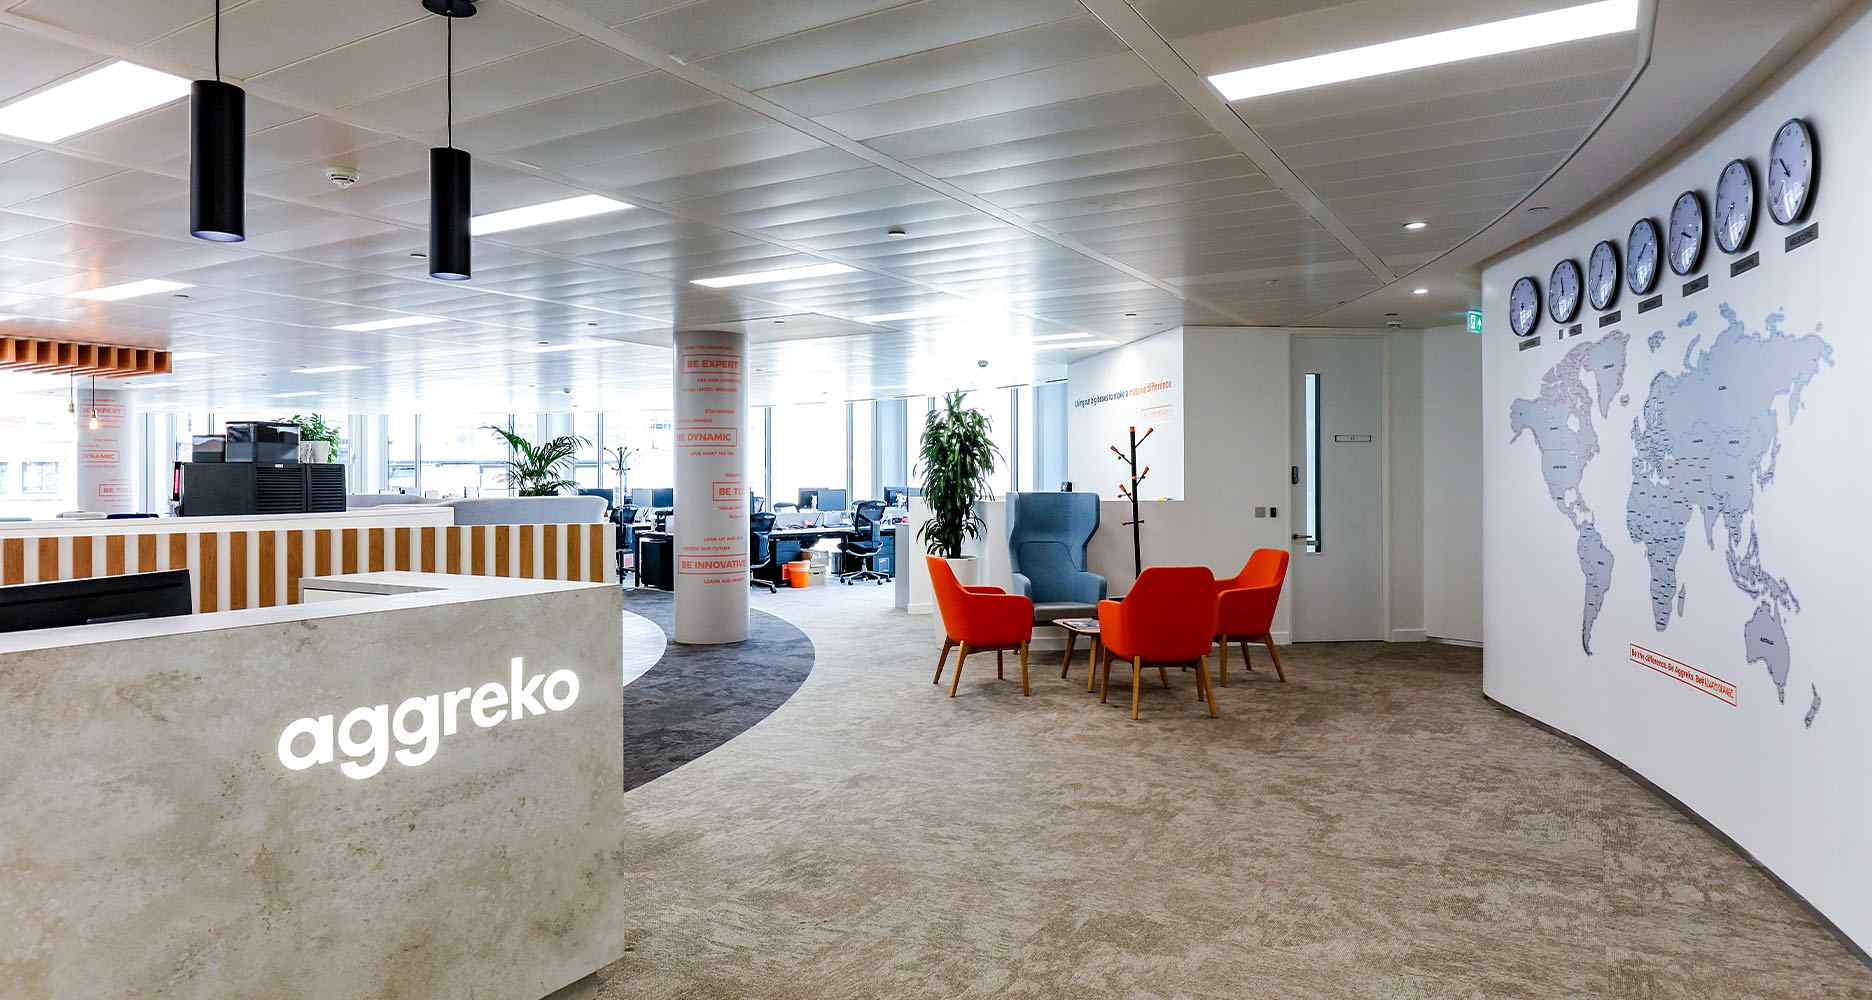 Aggreko – London headquarters office refurbishment